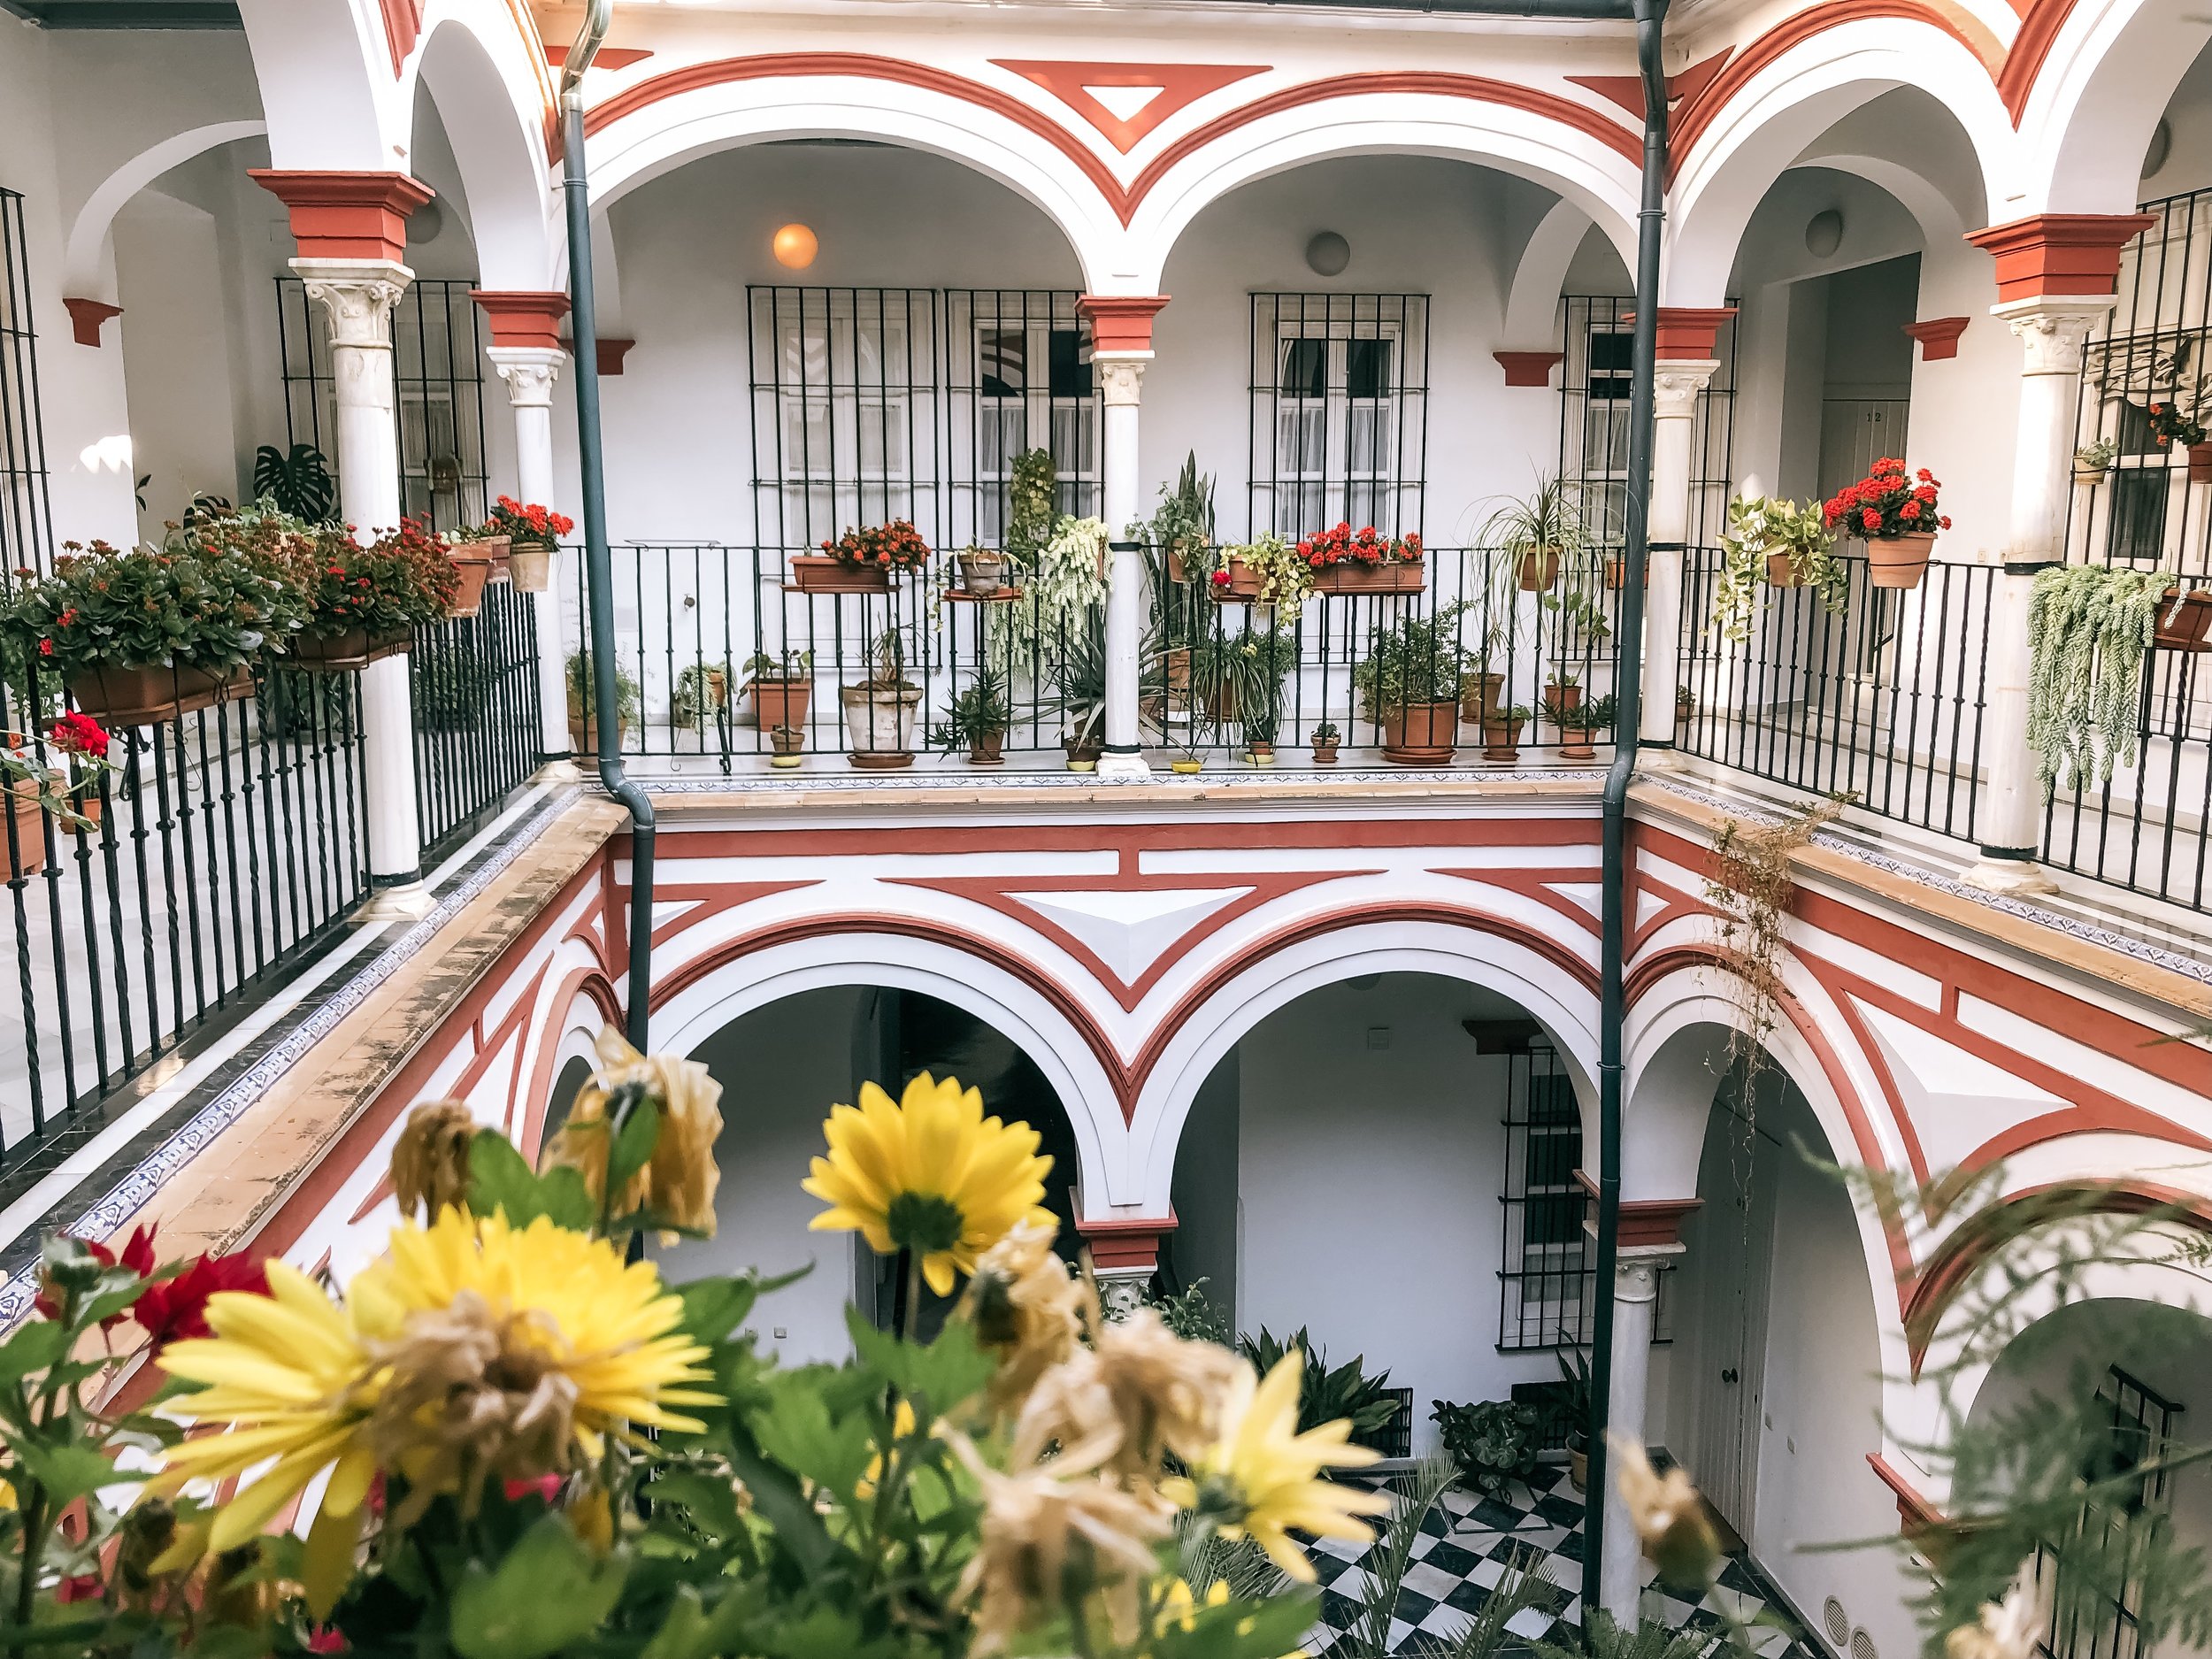 airbnb tours seville